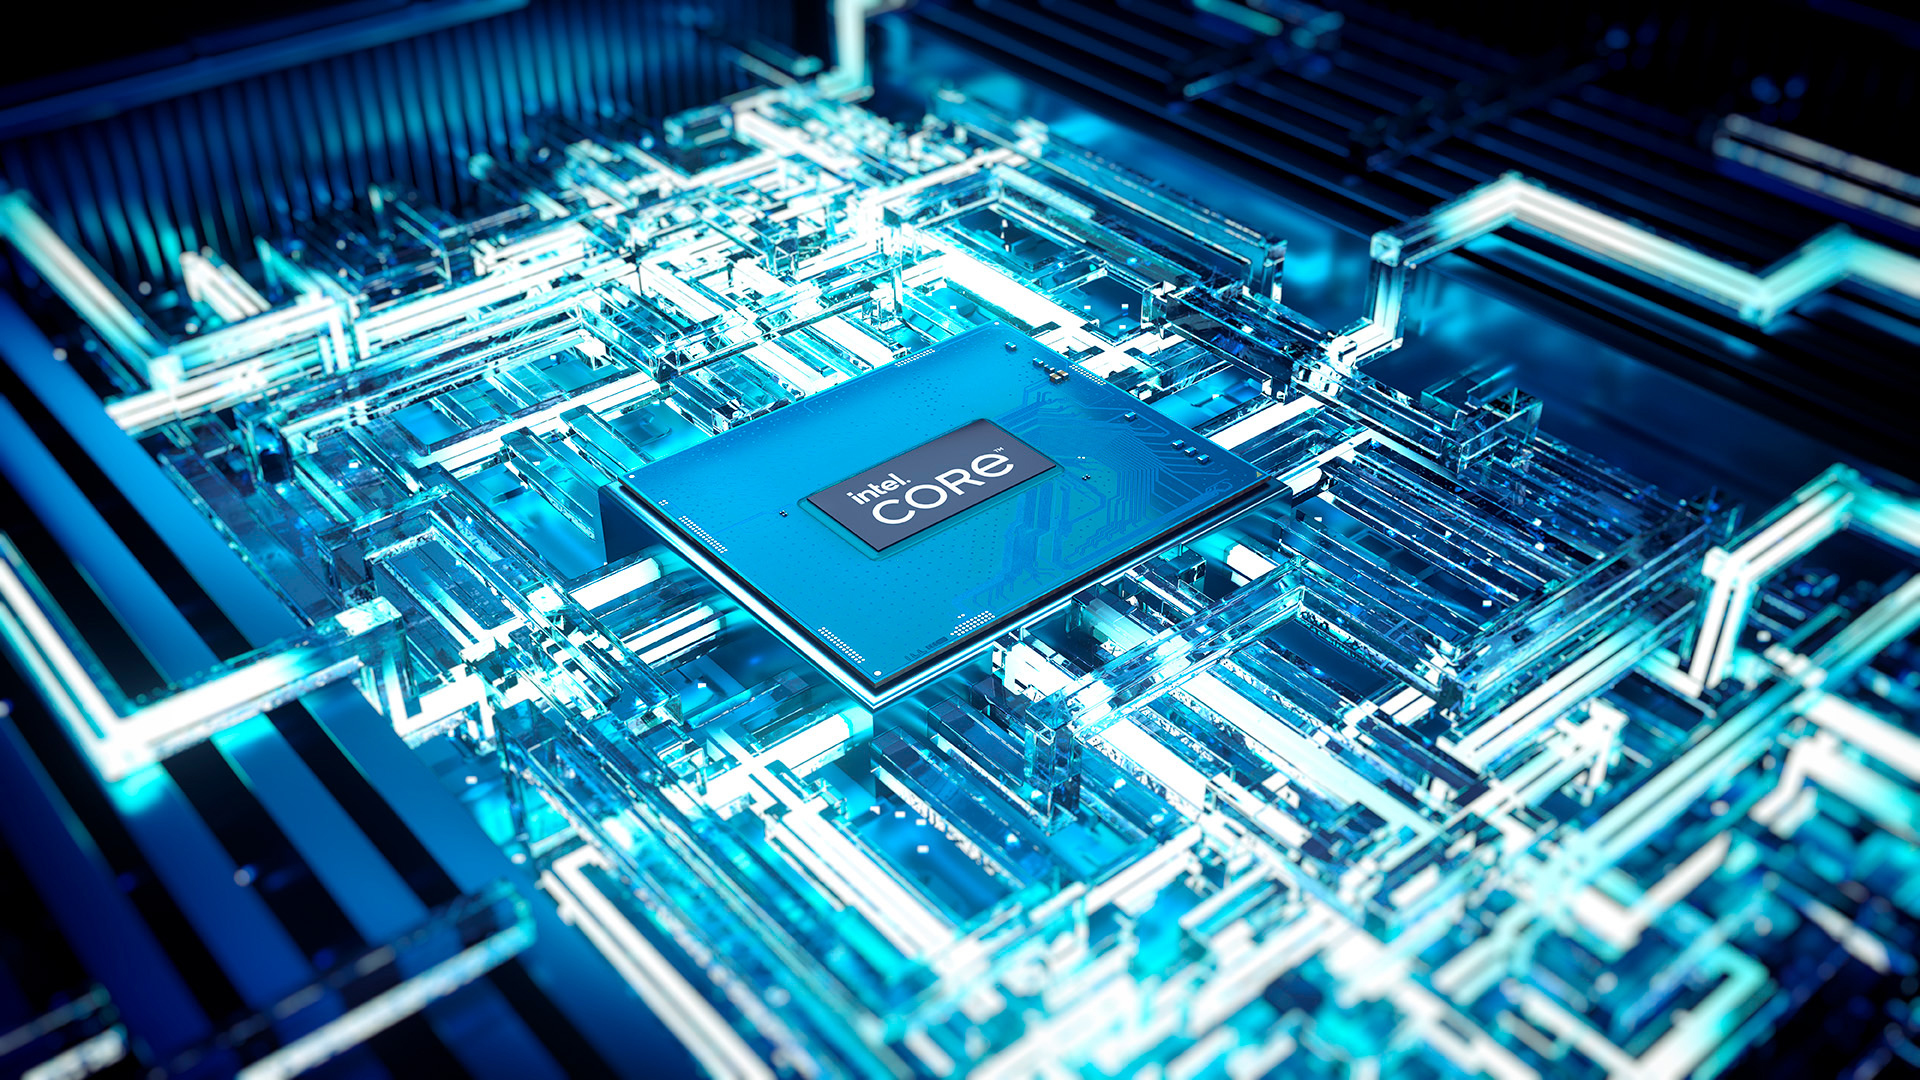 Intel Core i9 vs. i7 vs. i5: Which CPU Should You Buy?